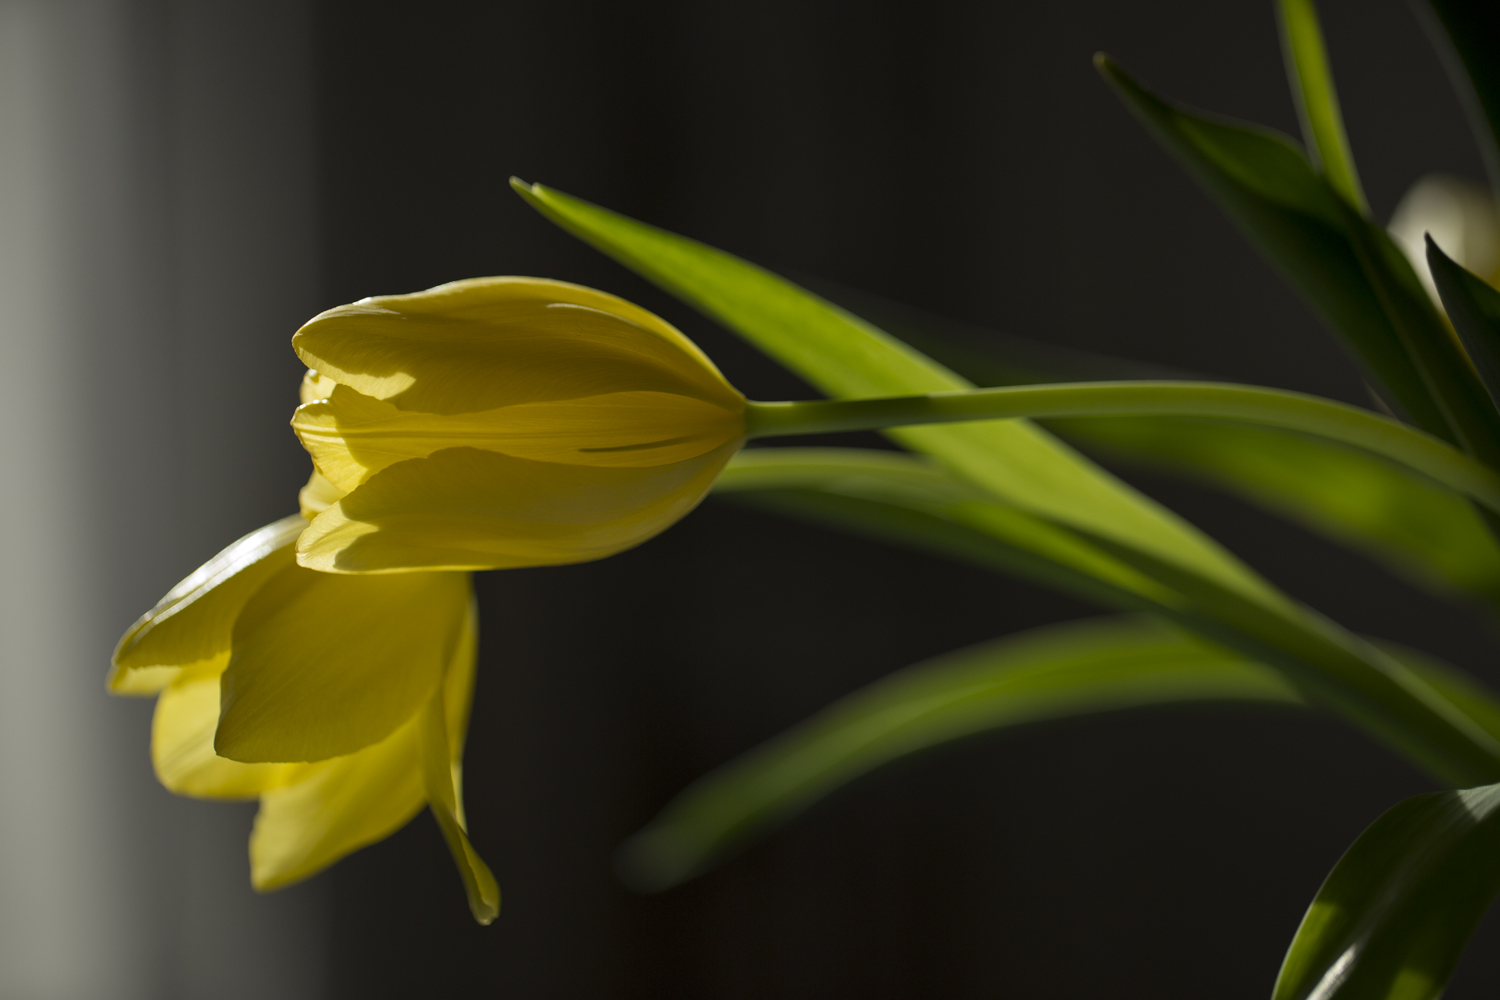 amys_yellow_tulips_02-11-16_4159.jpg